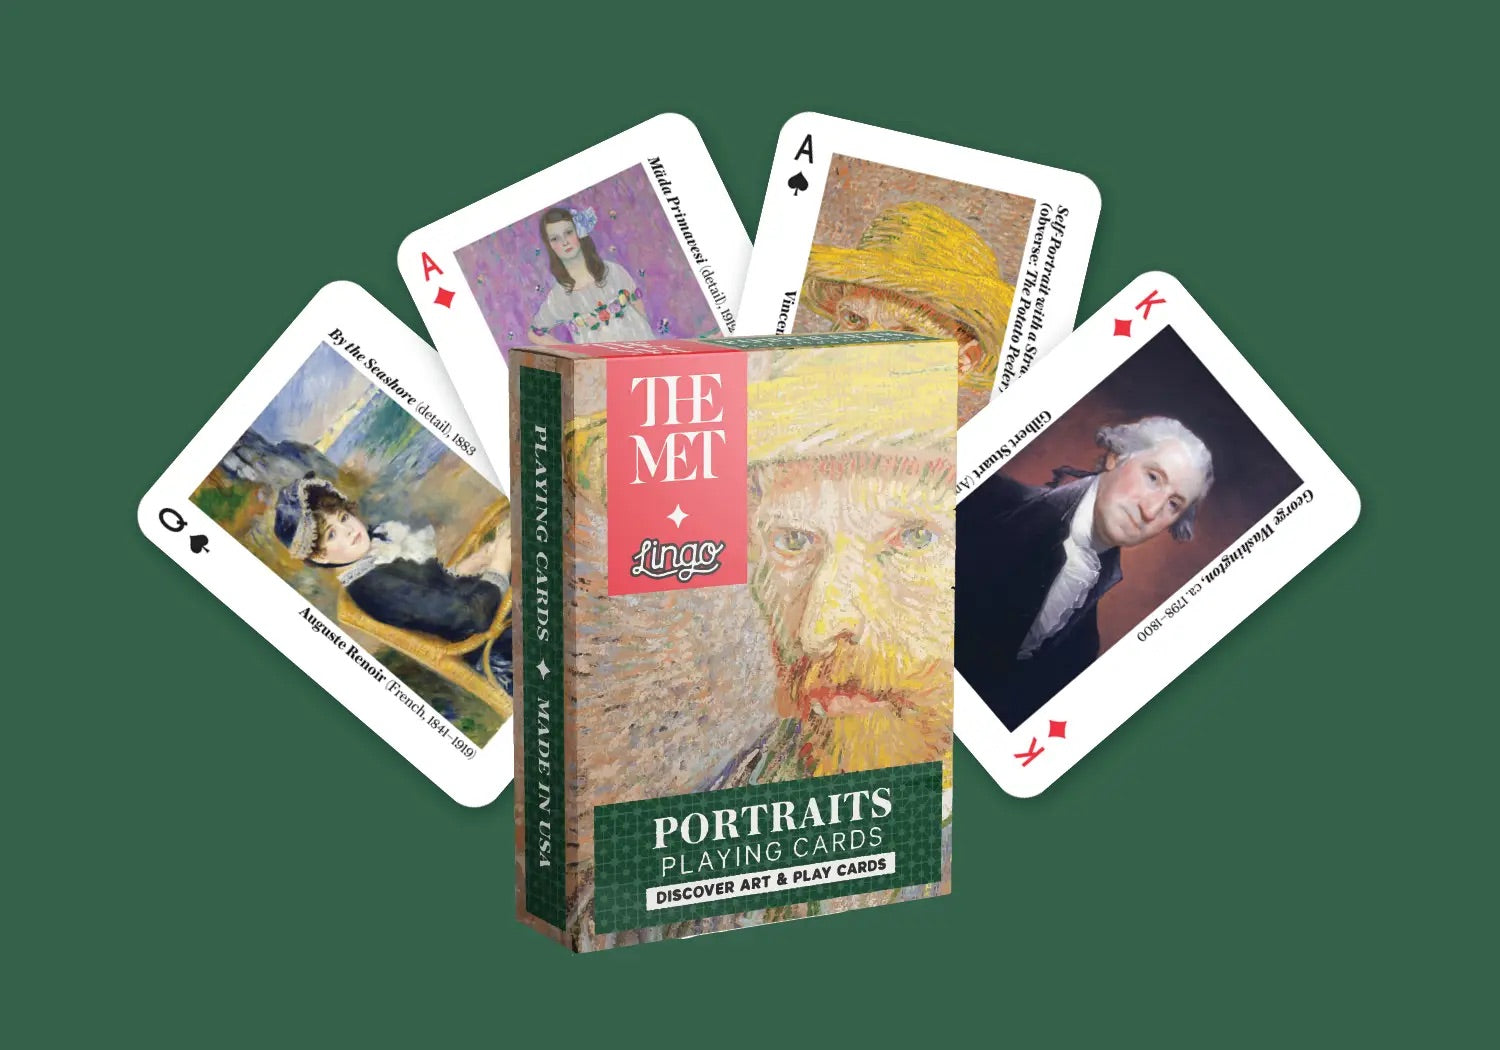 Portraits Playing Cards - Lingo x The Metropolitan Museum of Art